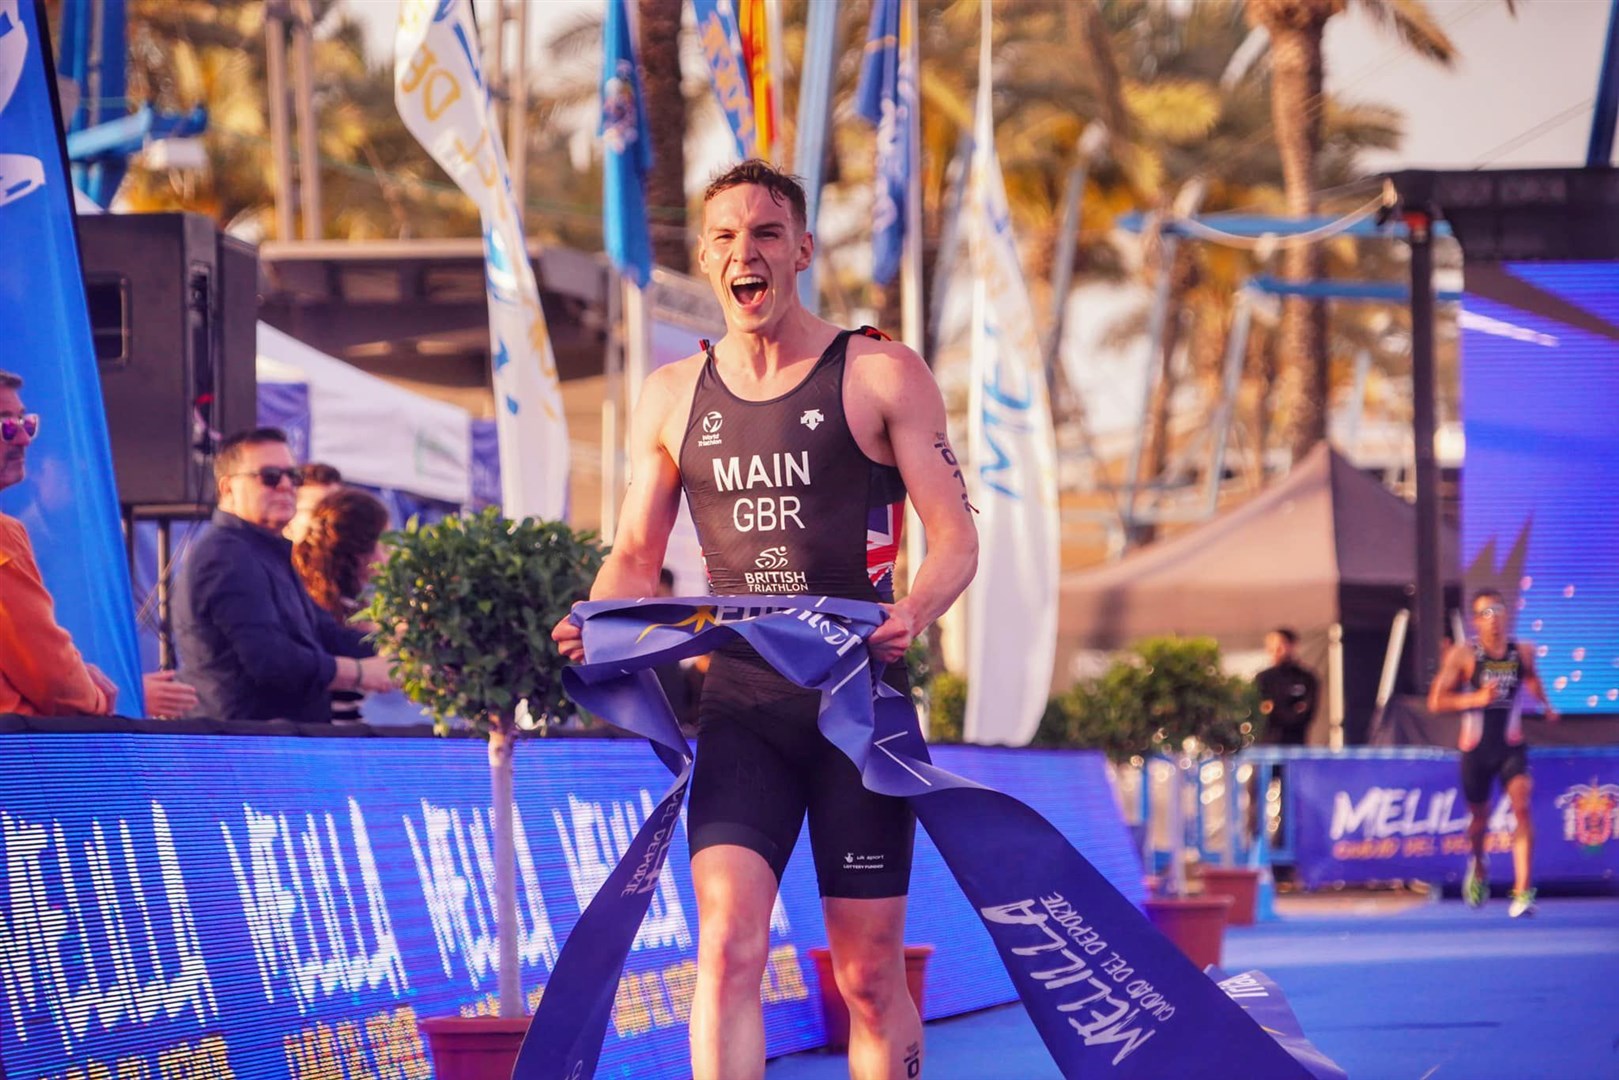 Cameron Main won the European Triathlon Cup race in Melilla, Spain this month.